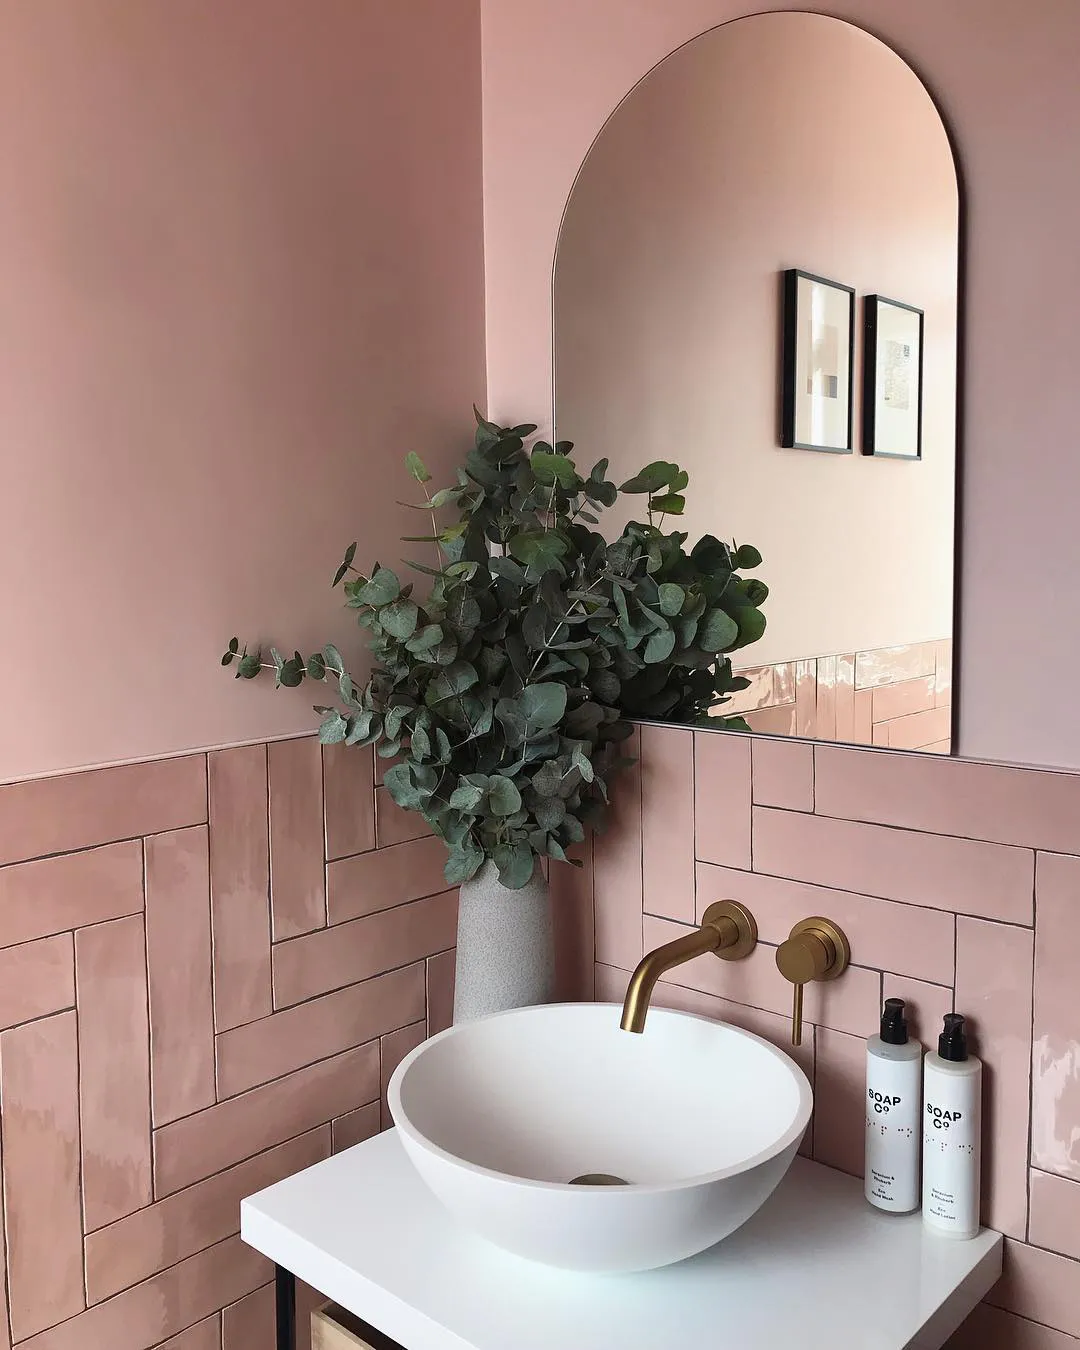 Gorgeous pink bathroom - PLAN